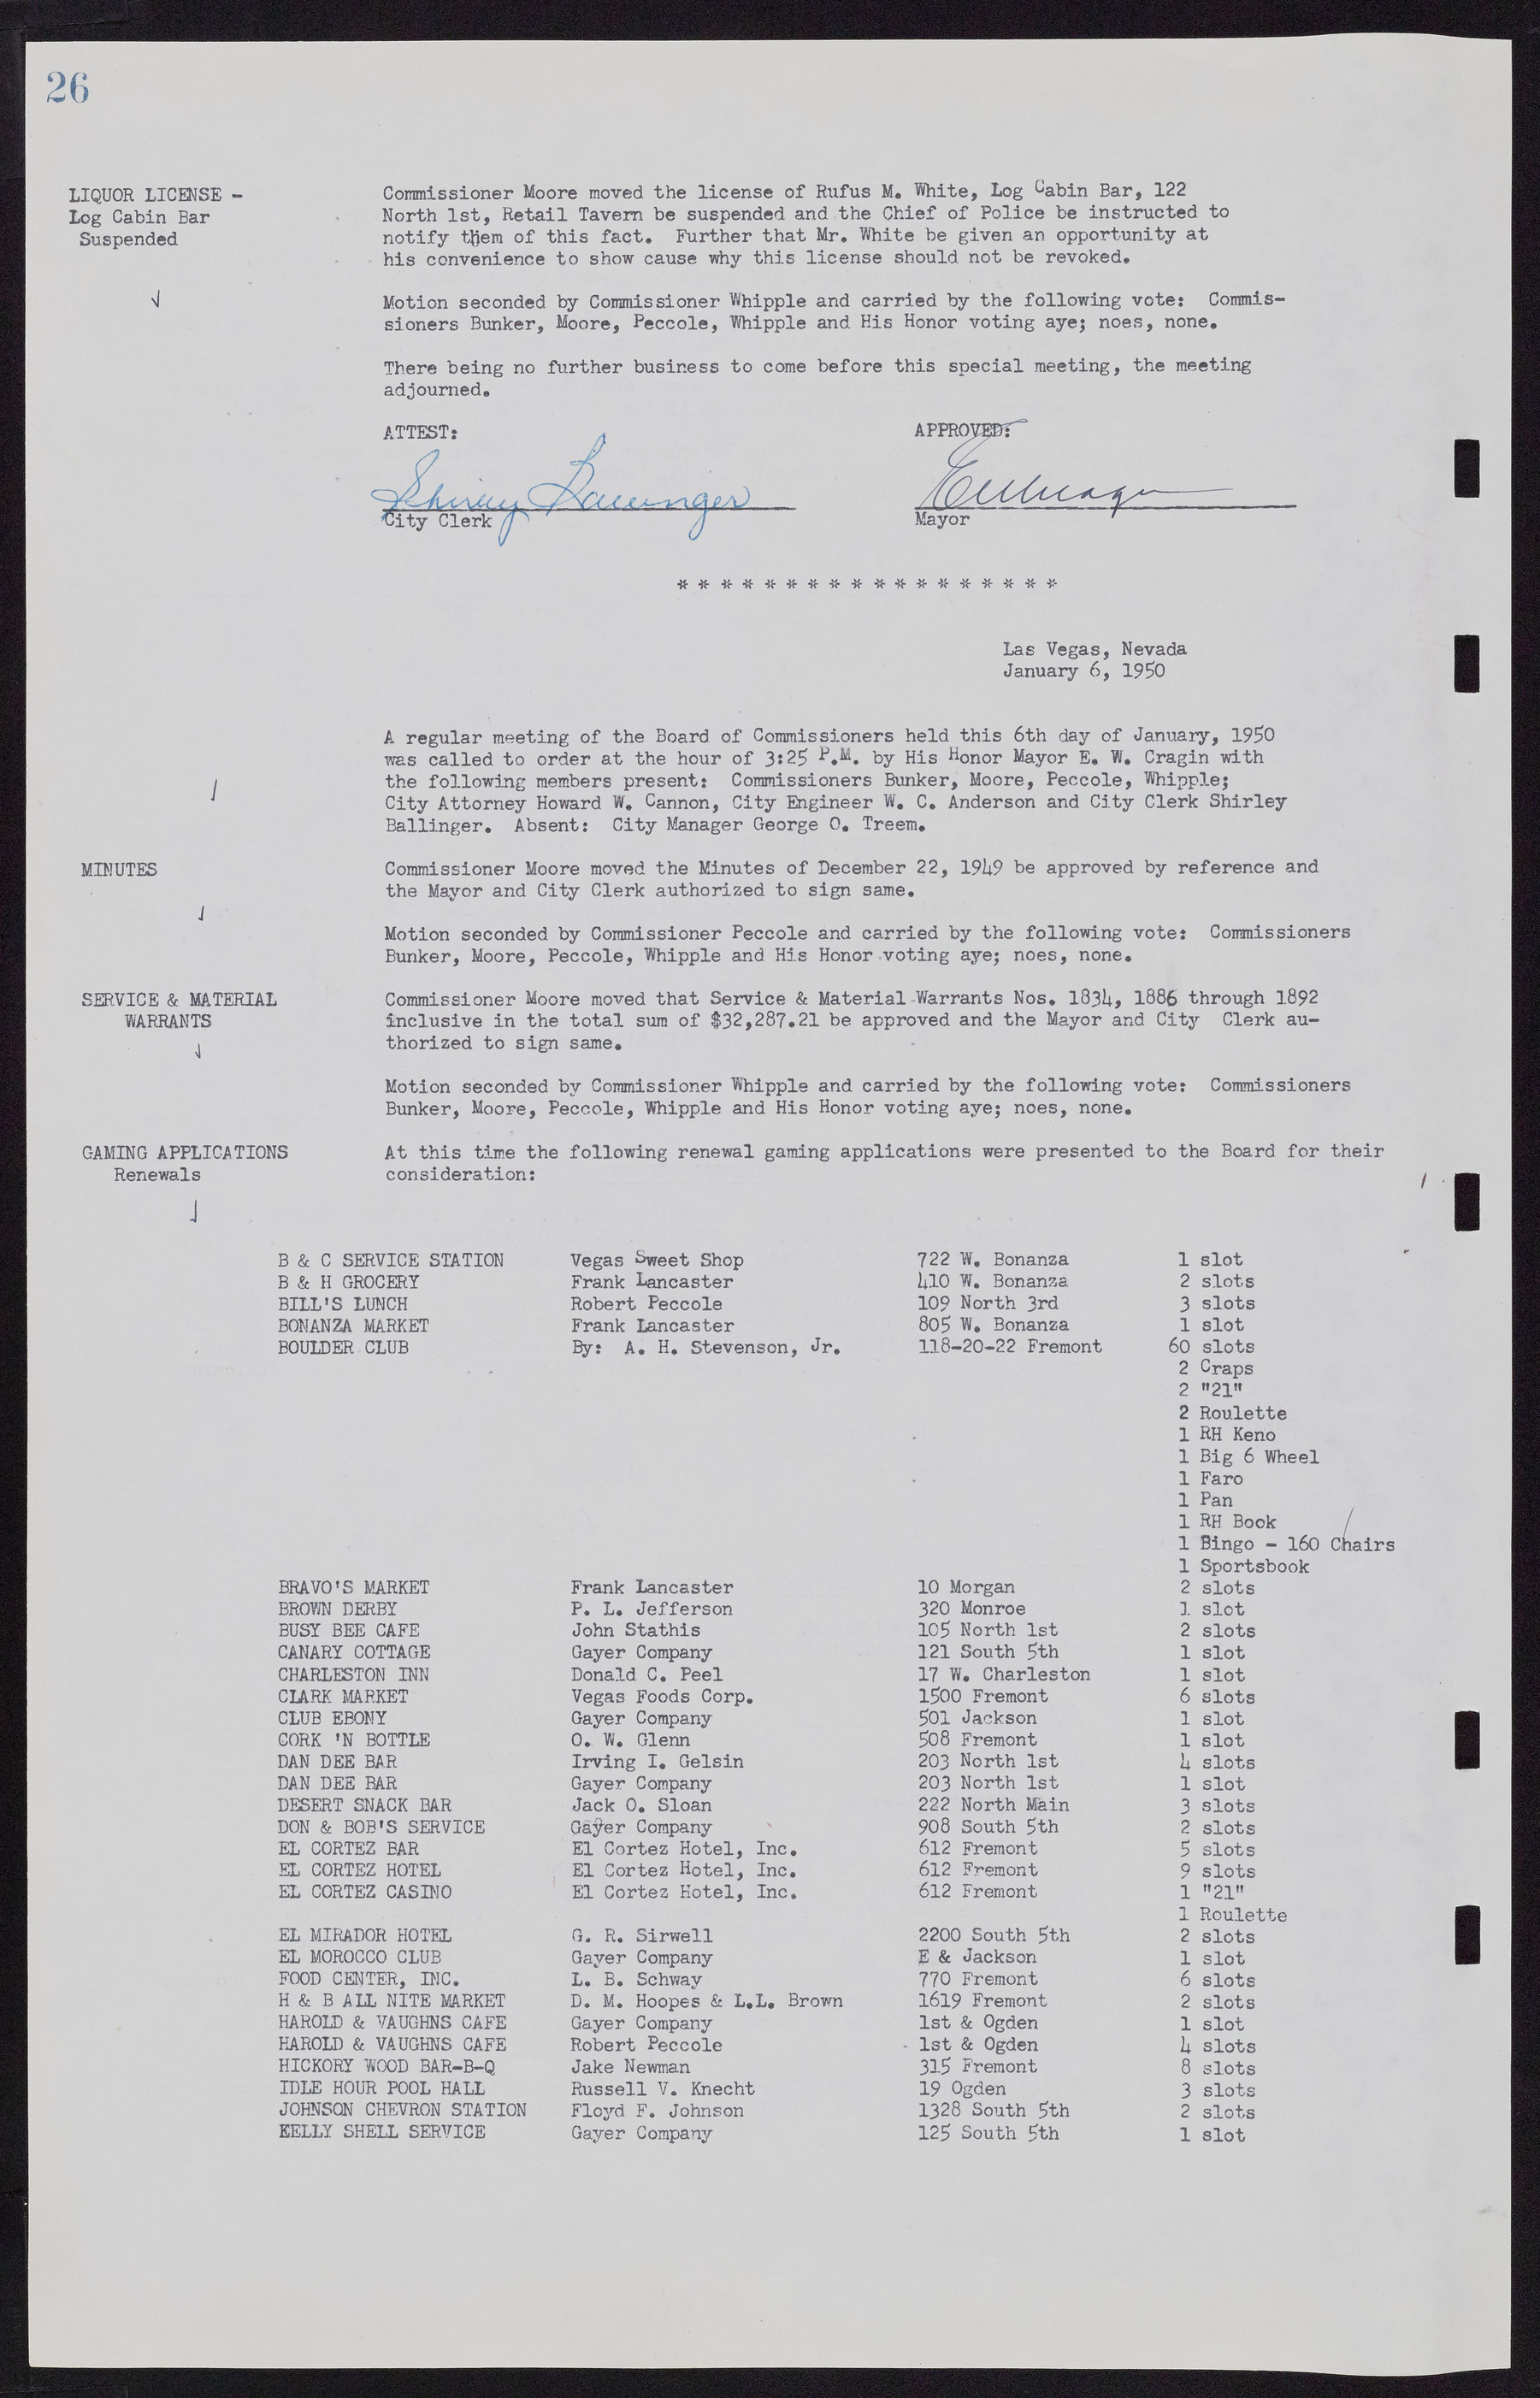 Las Vegas City Commission Minutes, November 7, 1949 to May 21, 1952, lvc000007-34